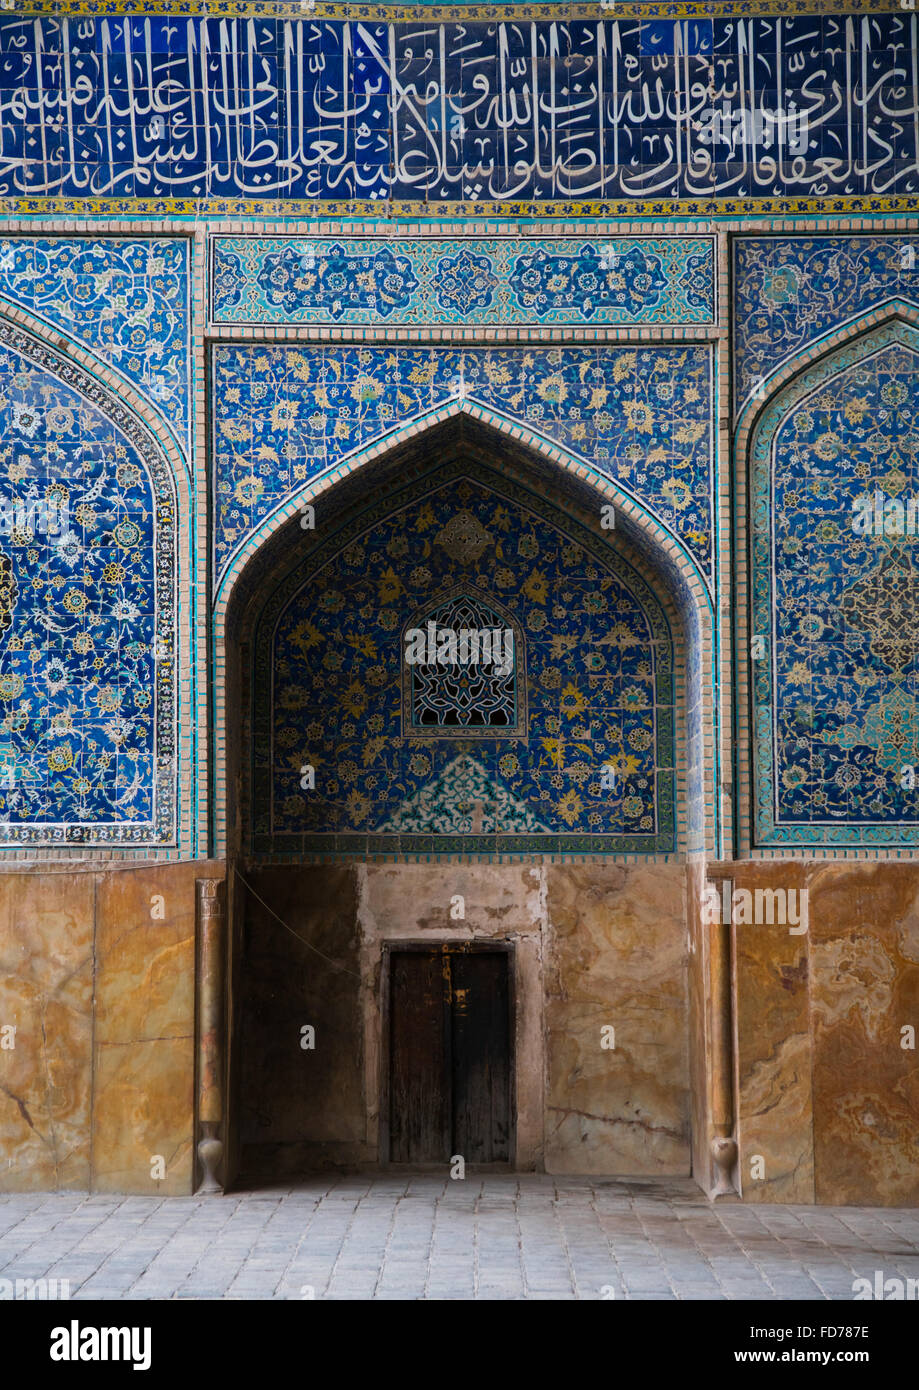 jameh masjid or friday mosque, Isfahan Province, isfahan, Iran Stock Photo